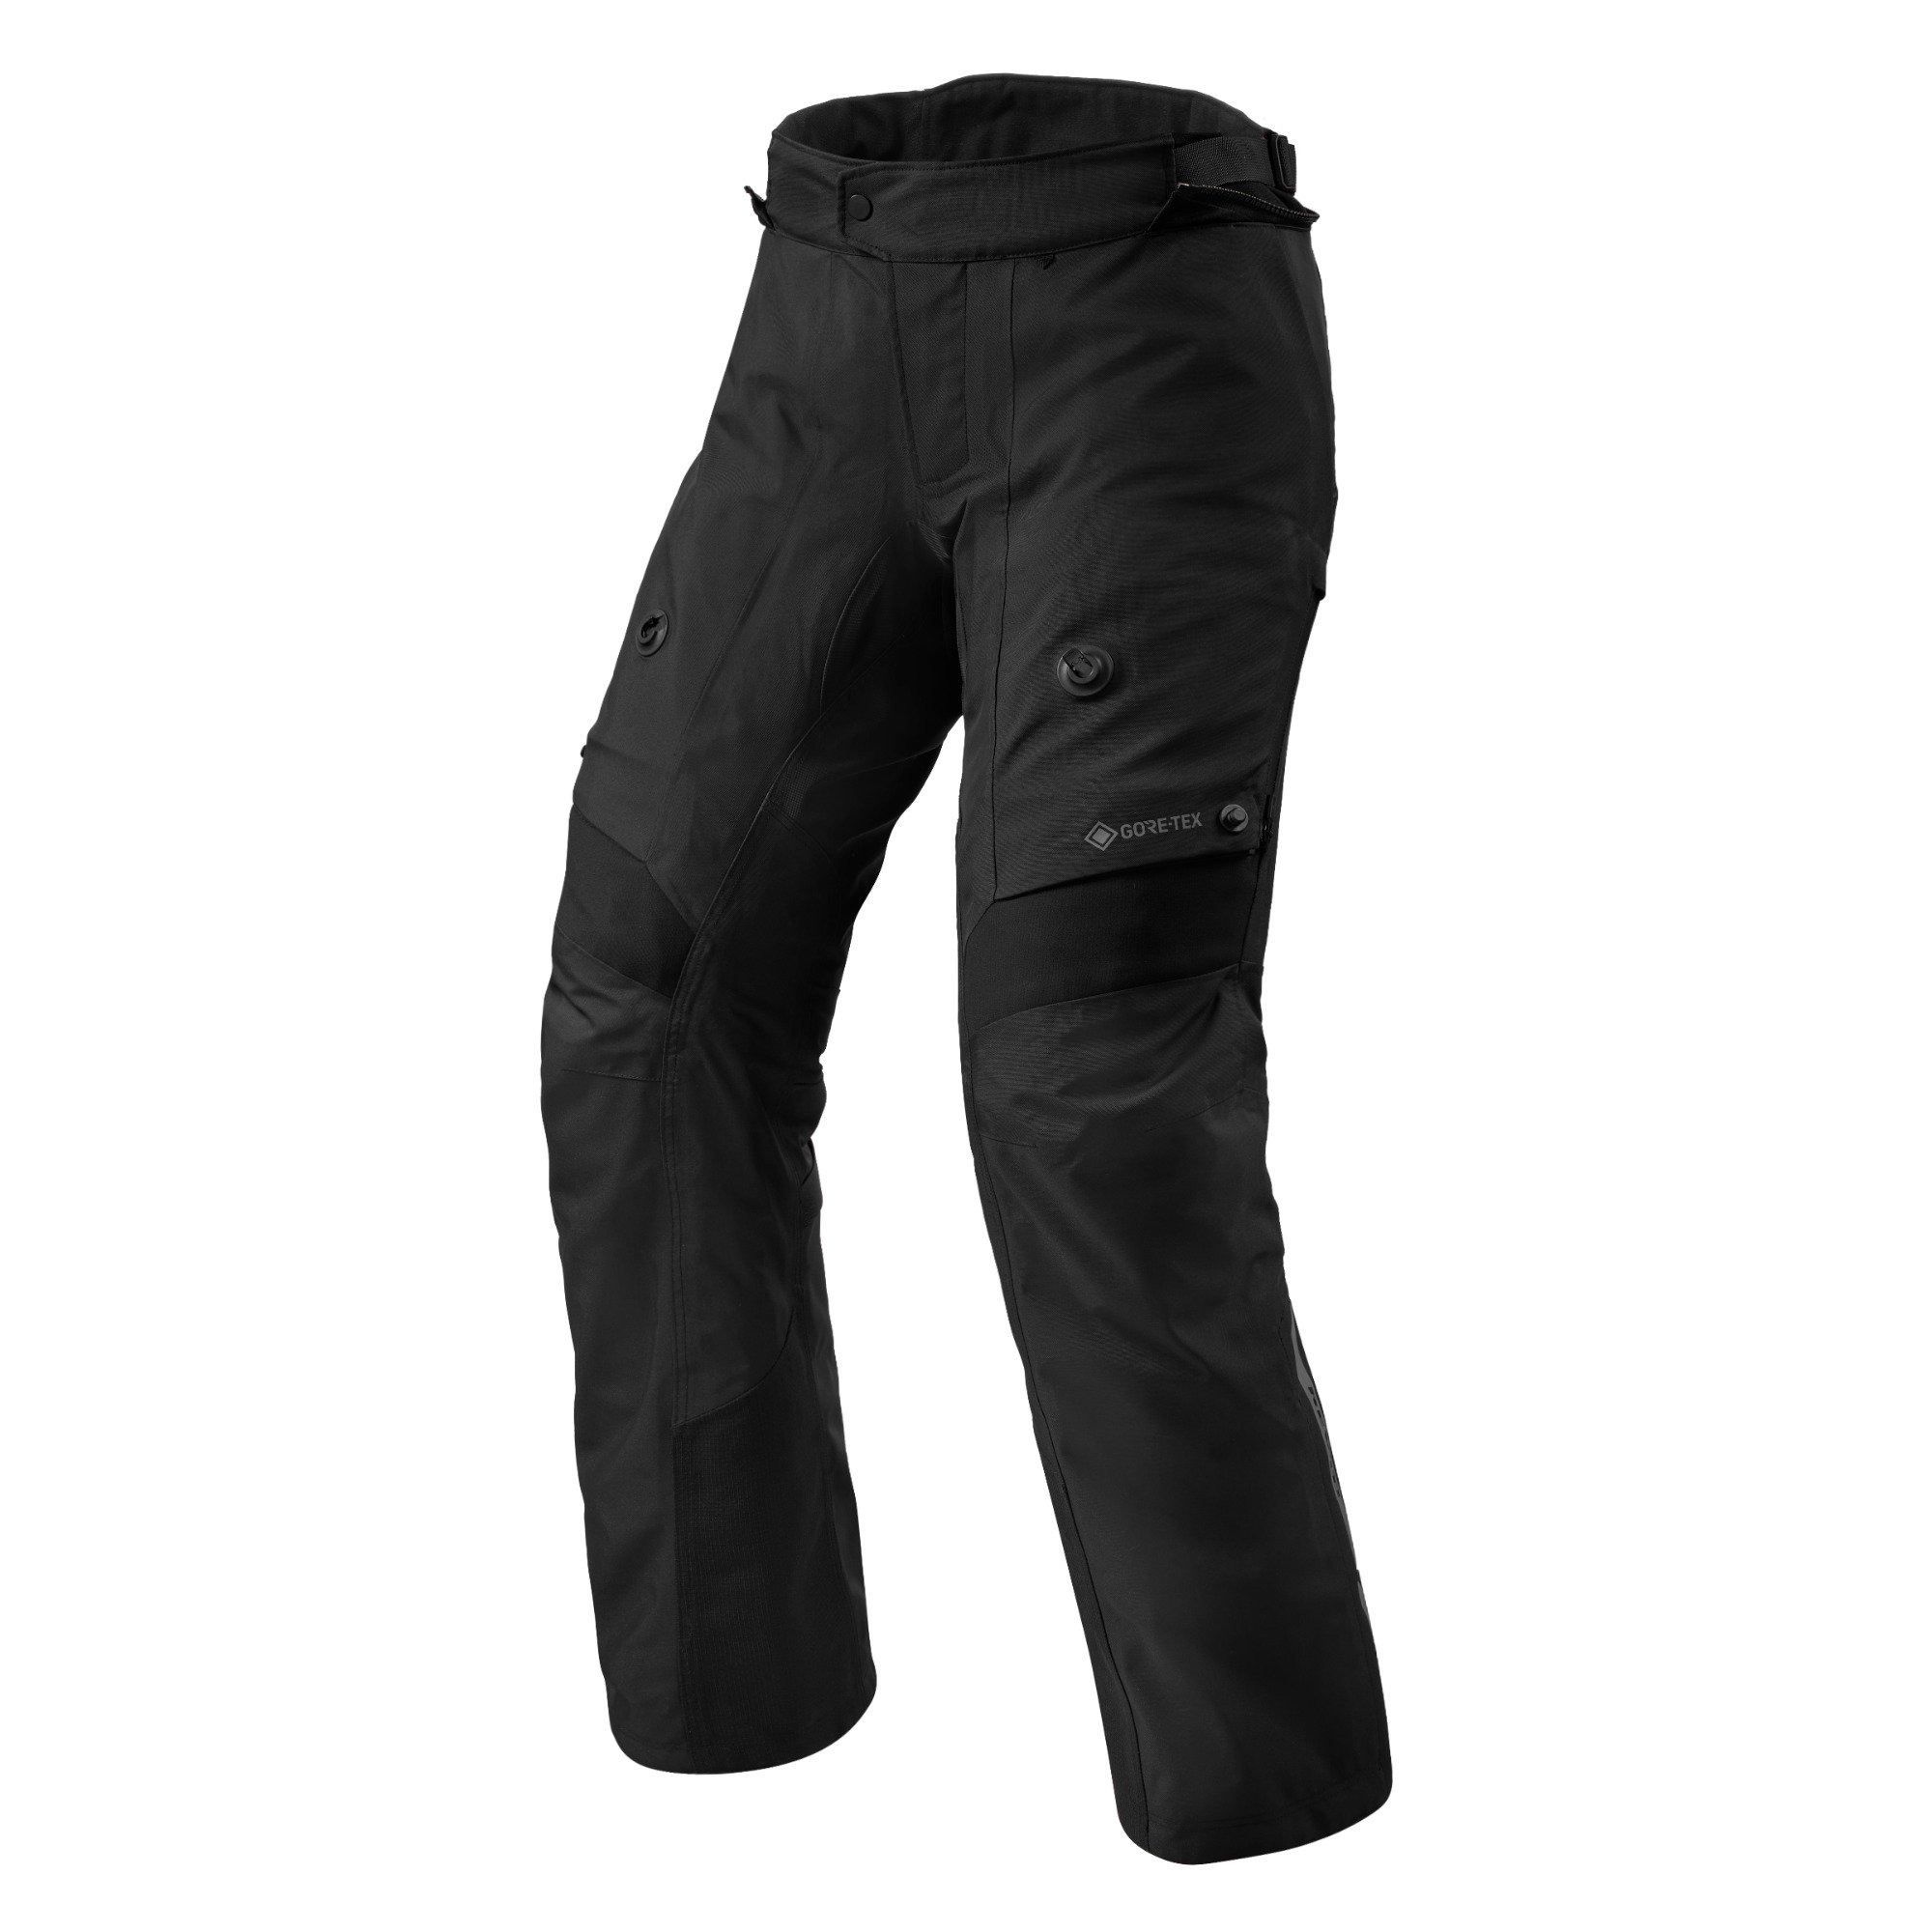 Image of REV'IT! Pants Poseidon 3 GTX Black Standard Motorcycle Pants Size M ID 8700001362443